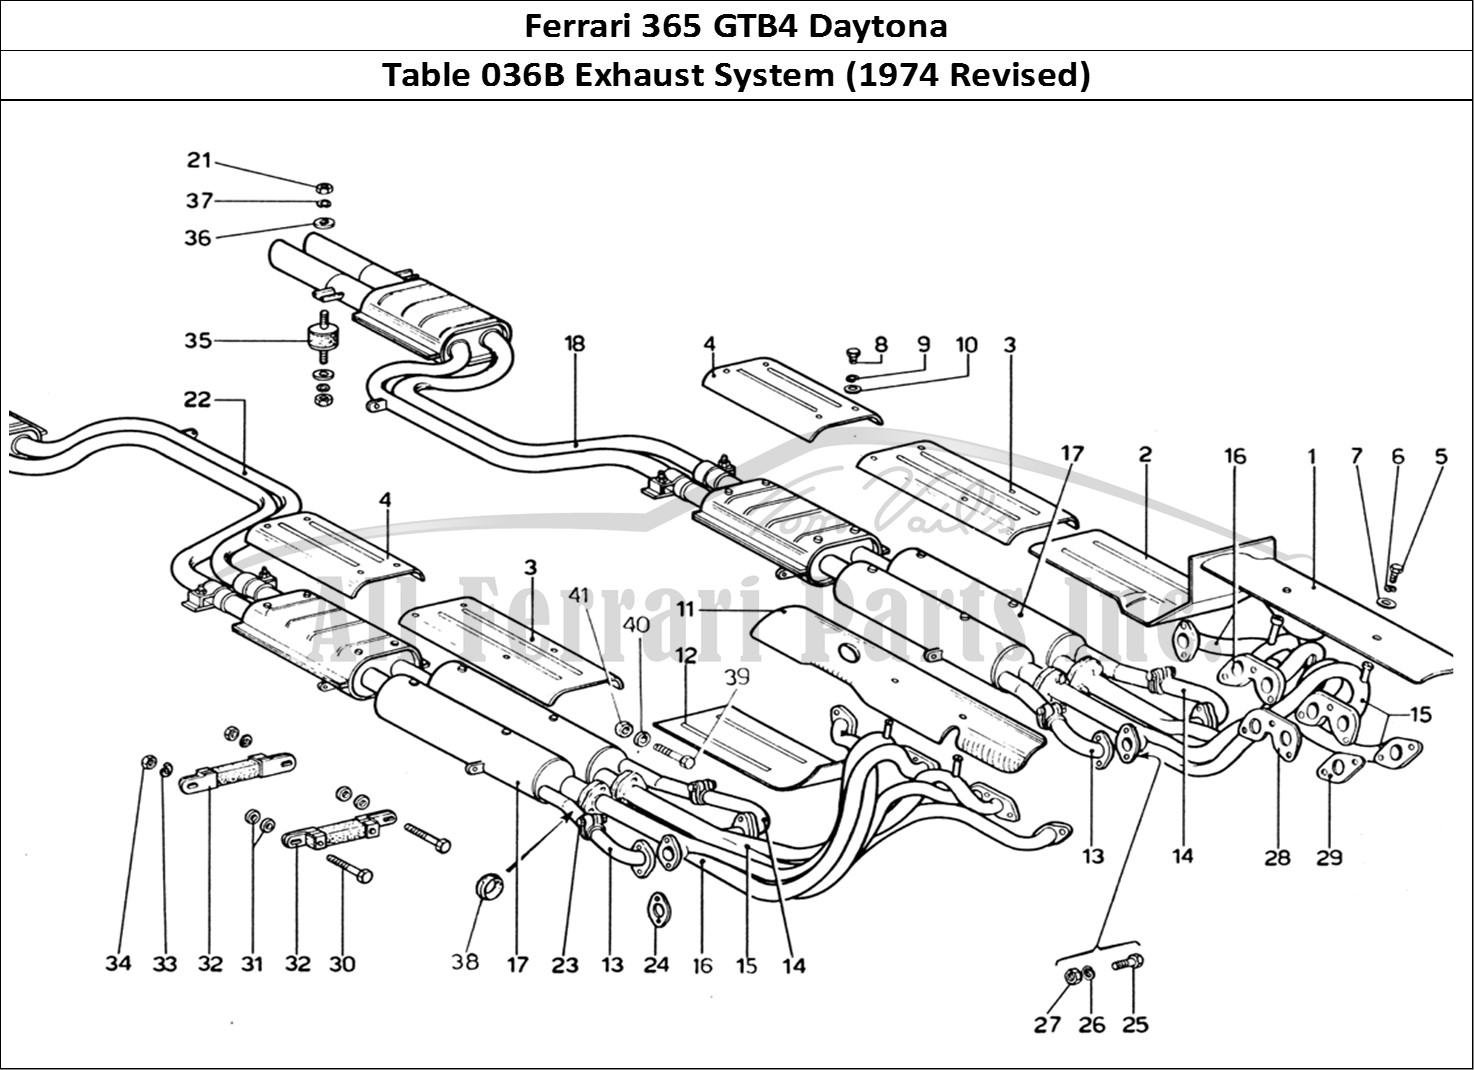 Ferrari Parts Ferrari 365 GTB4 Daytona (1969) Page 036 Exhaust System (1974 Revi